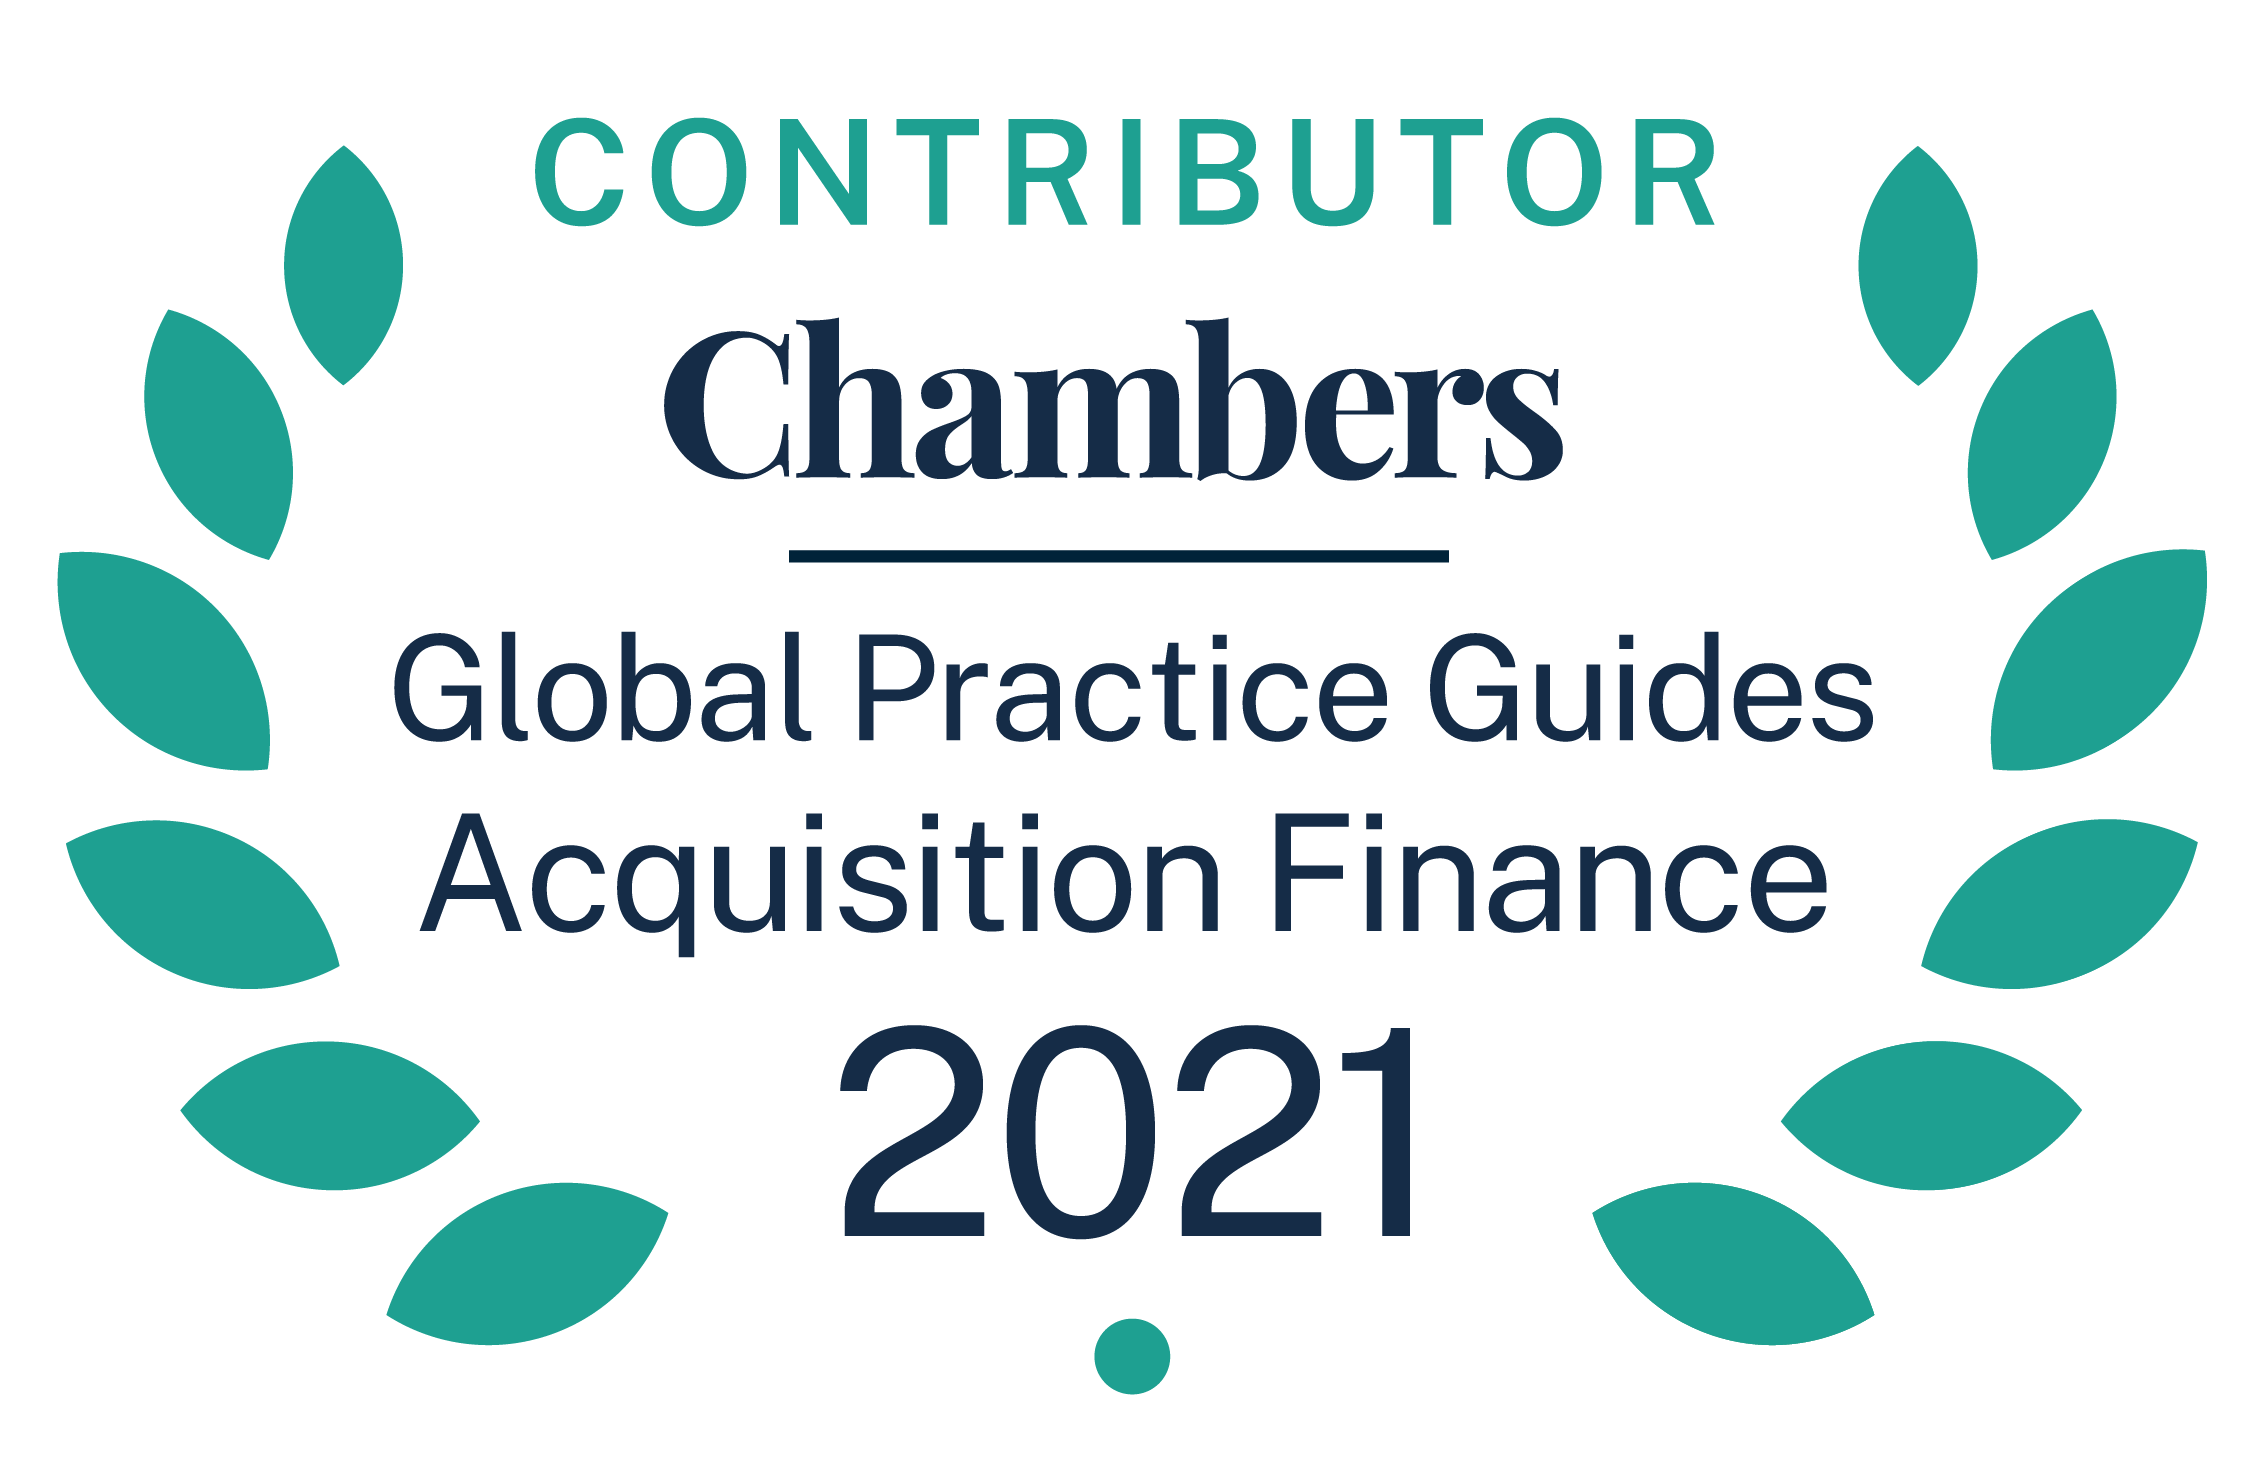 Acquisition Finance Guide 2021